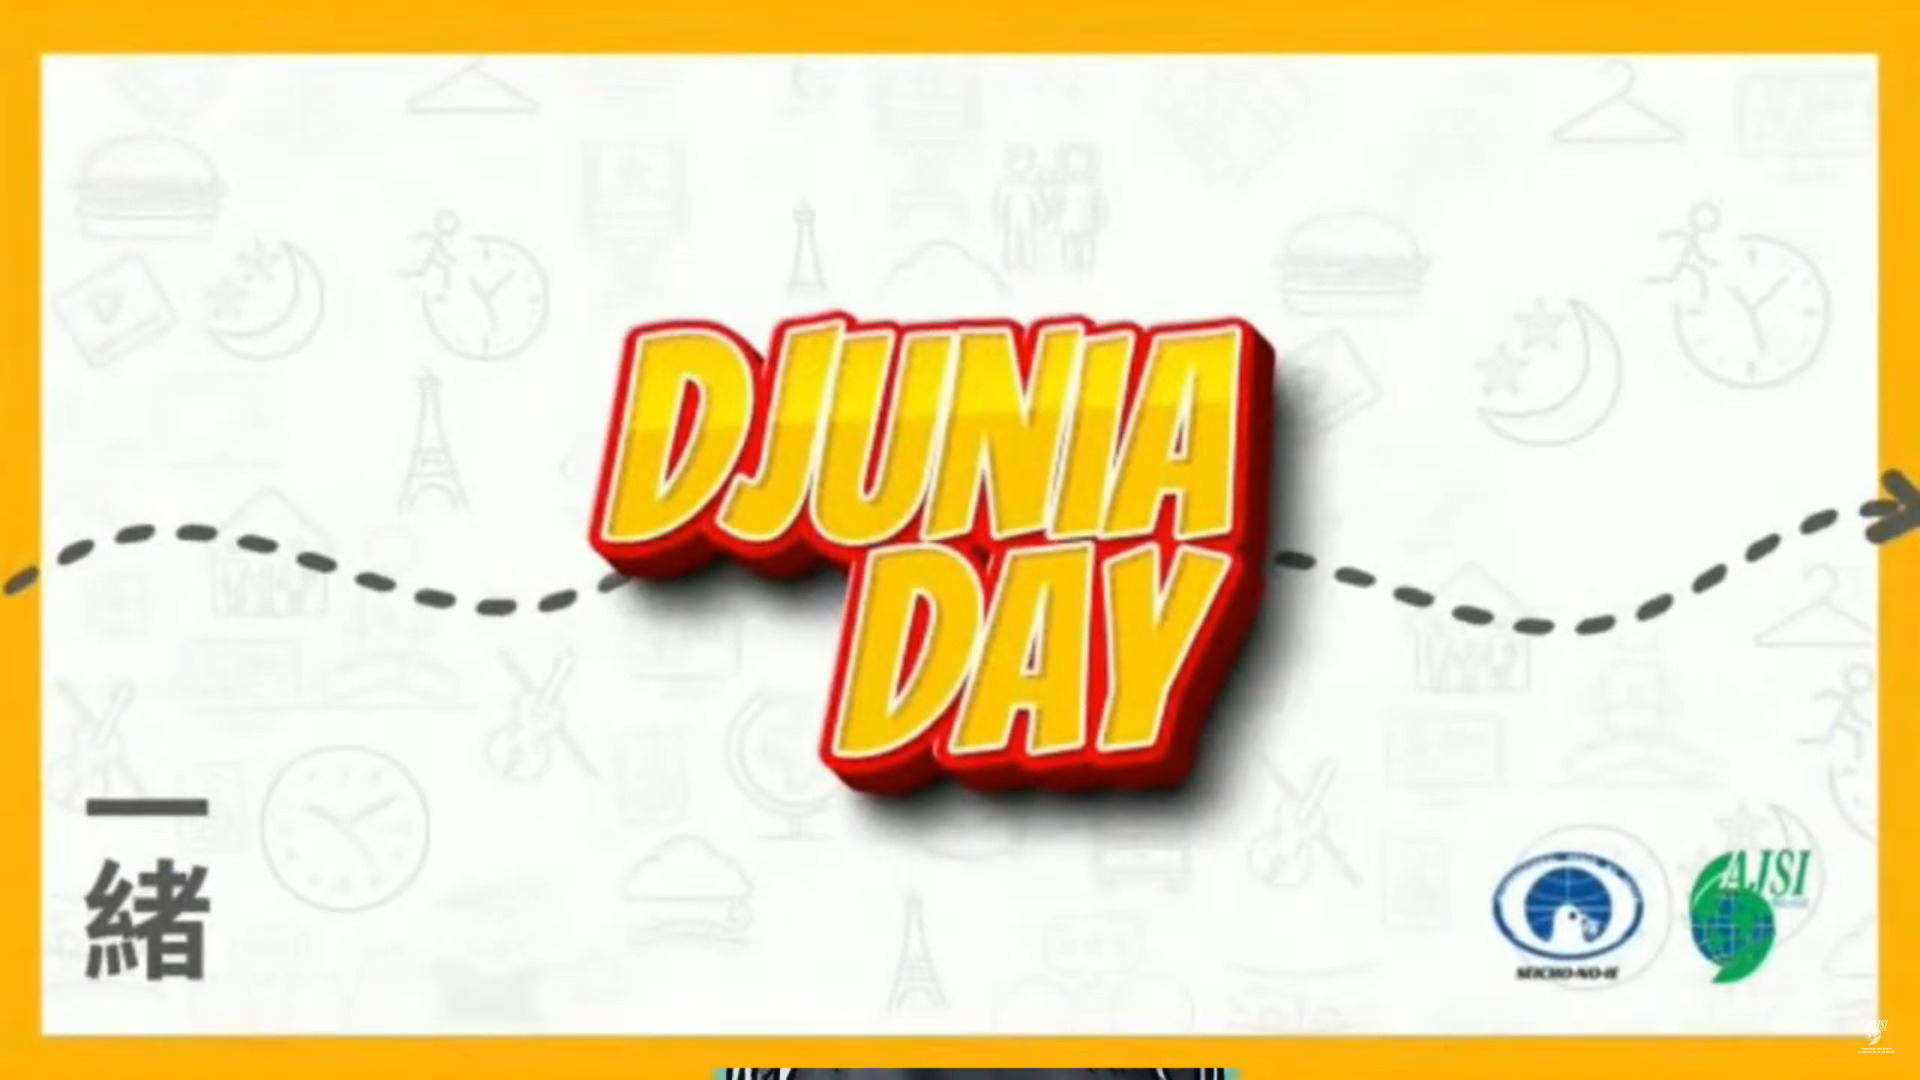 djunia67 DJUNIA DAY - O evento que bombou entre os juvenis e junia DJUNIA DAY